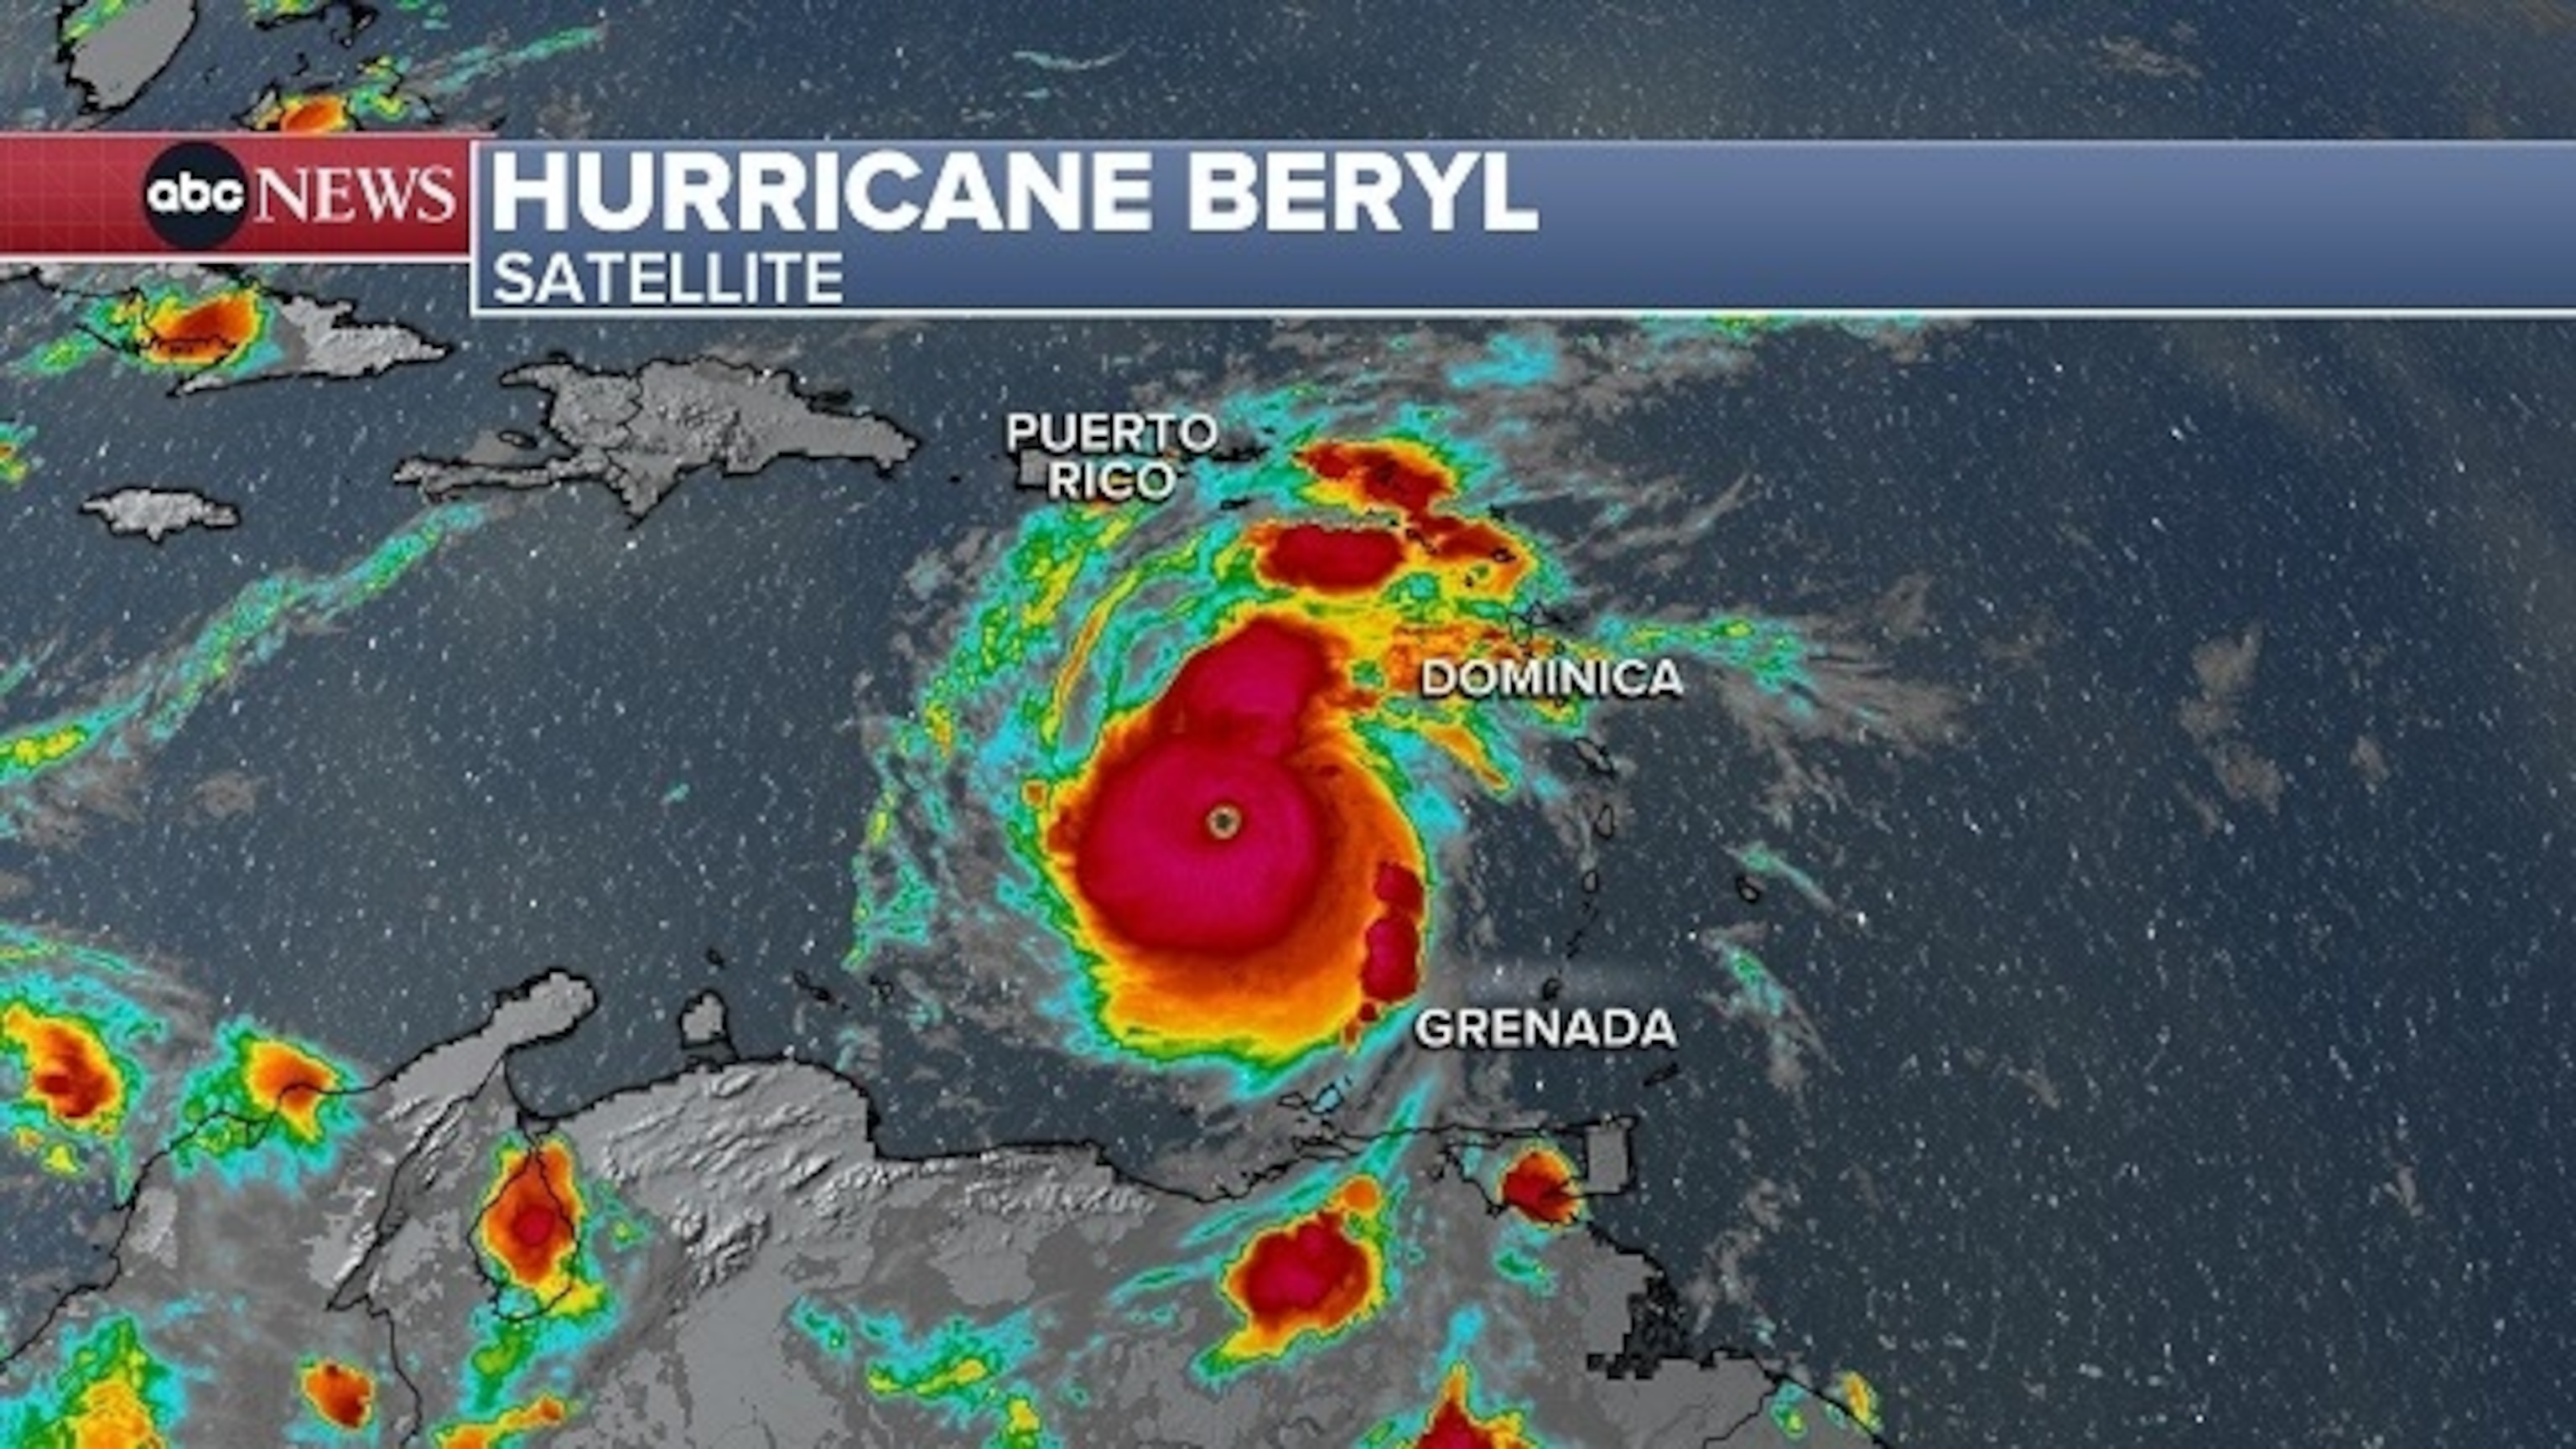 An illustration of the path of Hurricane Beryl (ABC News)